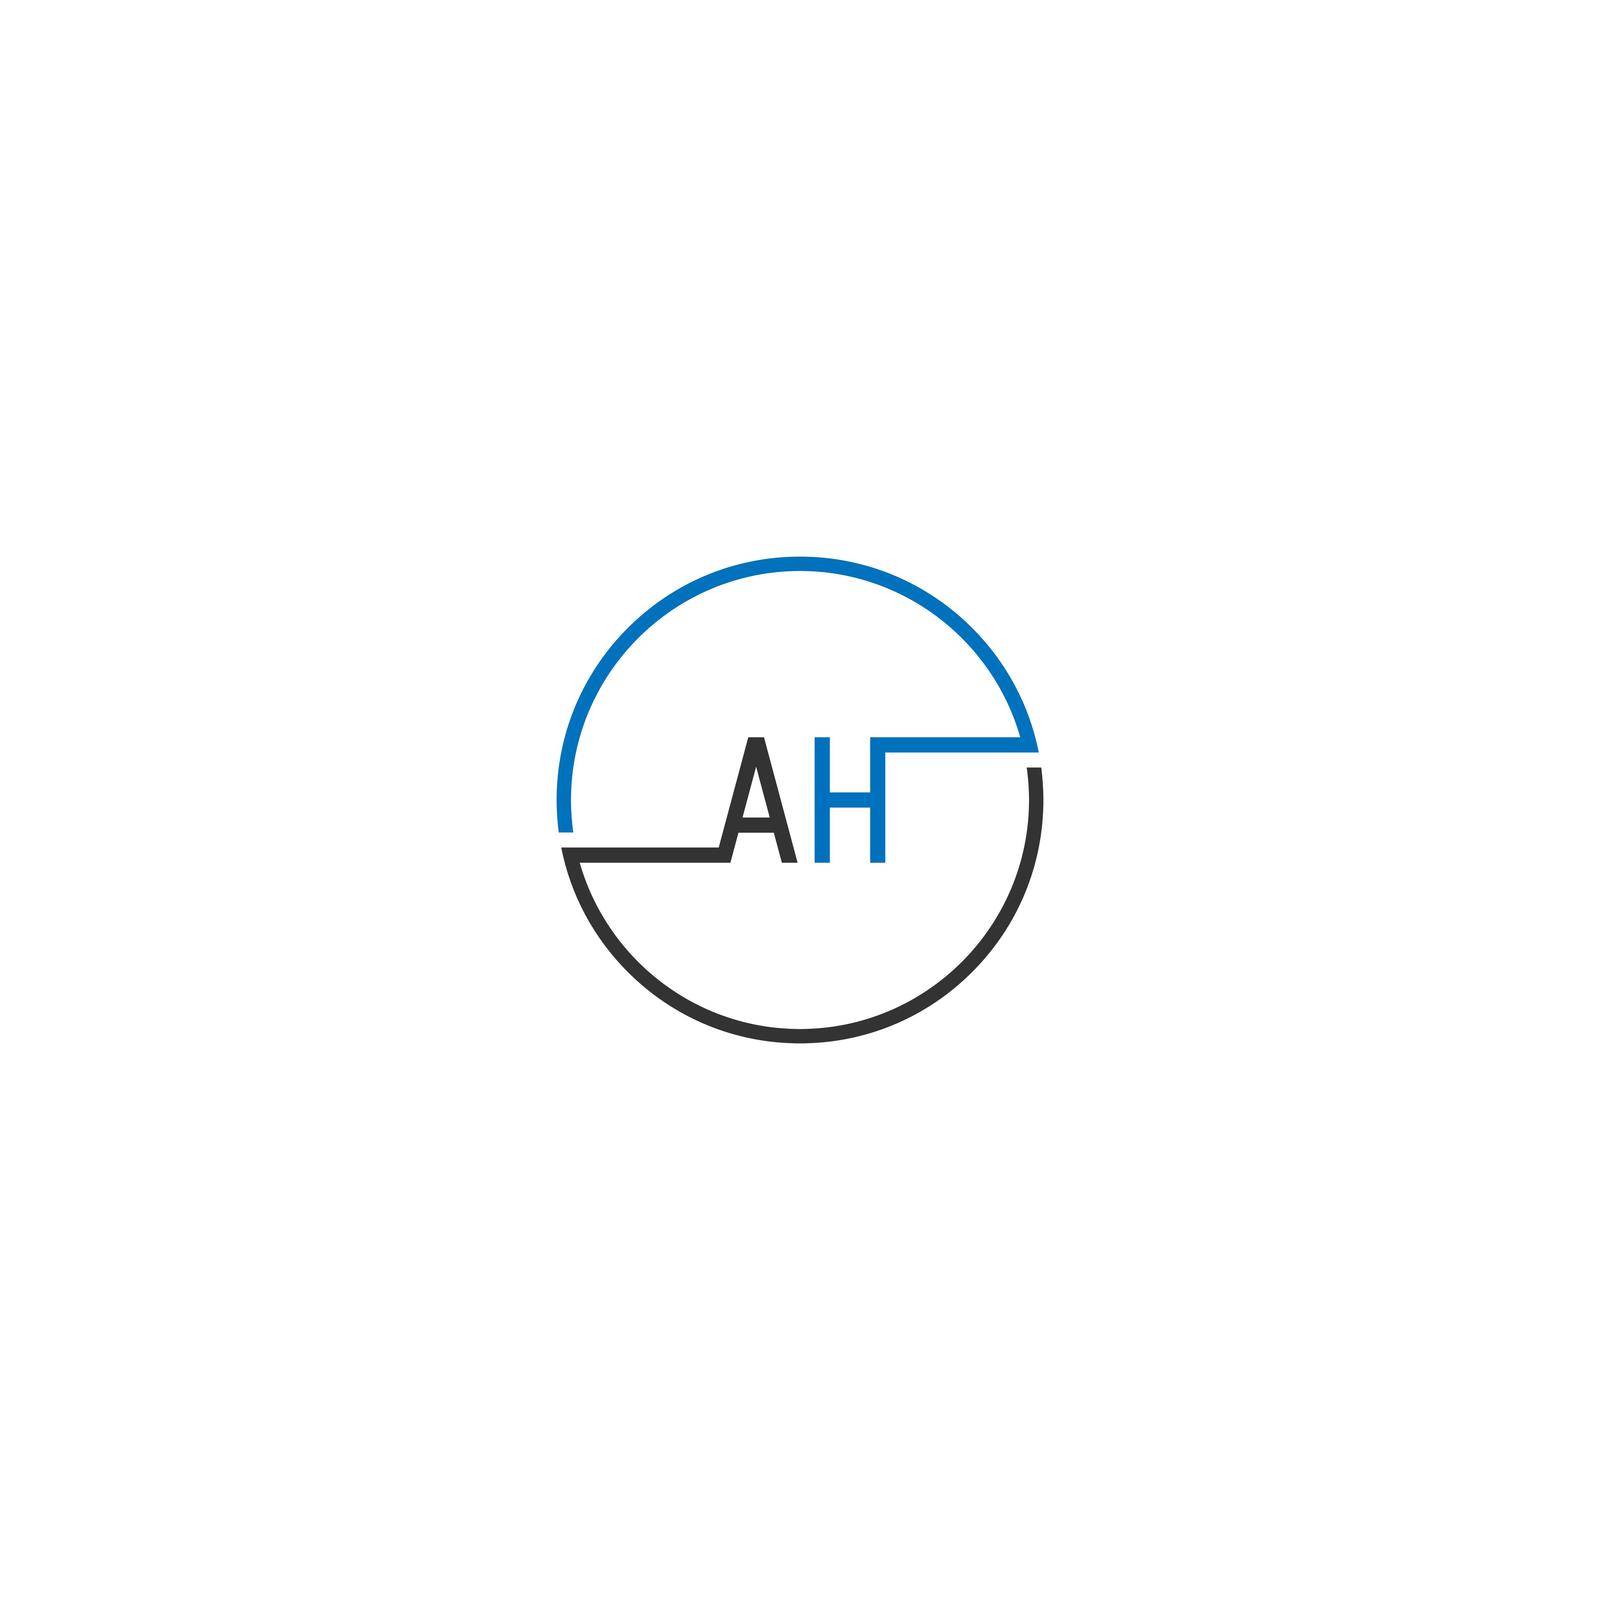 AH logo letter design concept by bellaxbudhong3